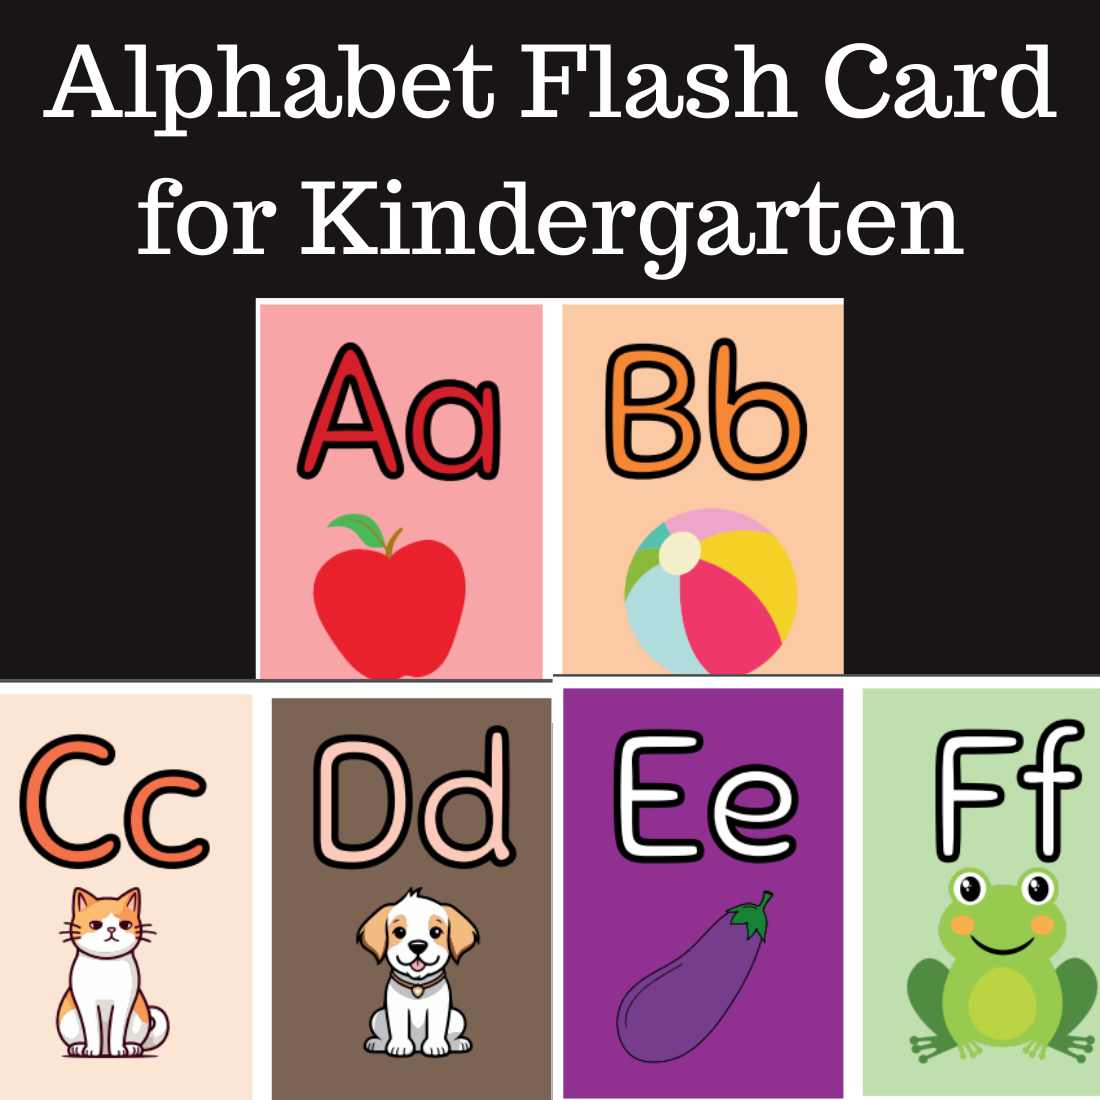 Alphabet Flash Card for Kindergarten (PDF Printable) cover image.